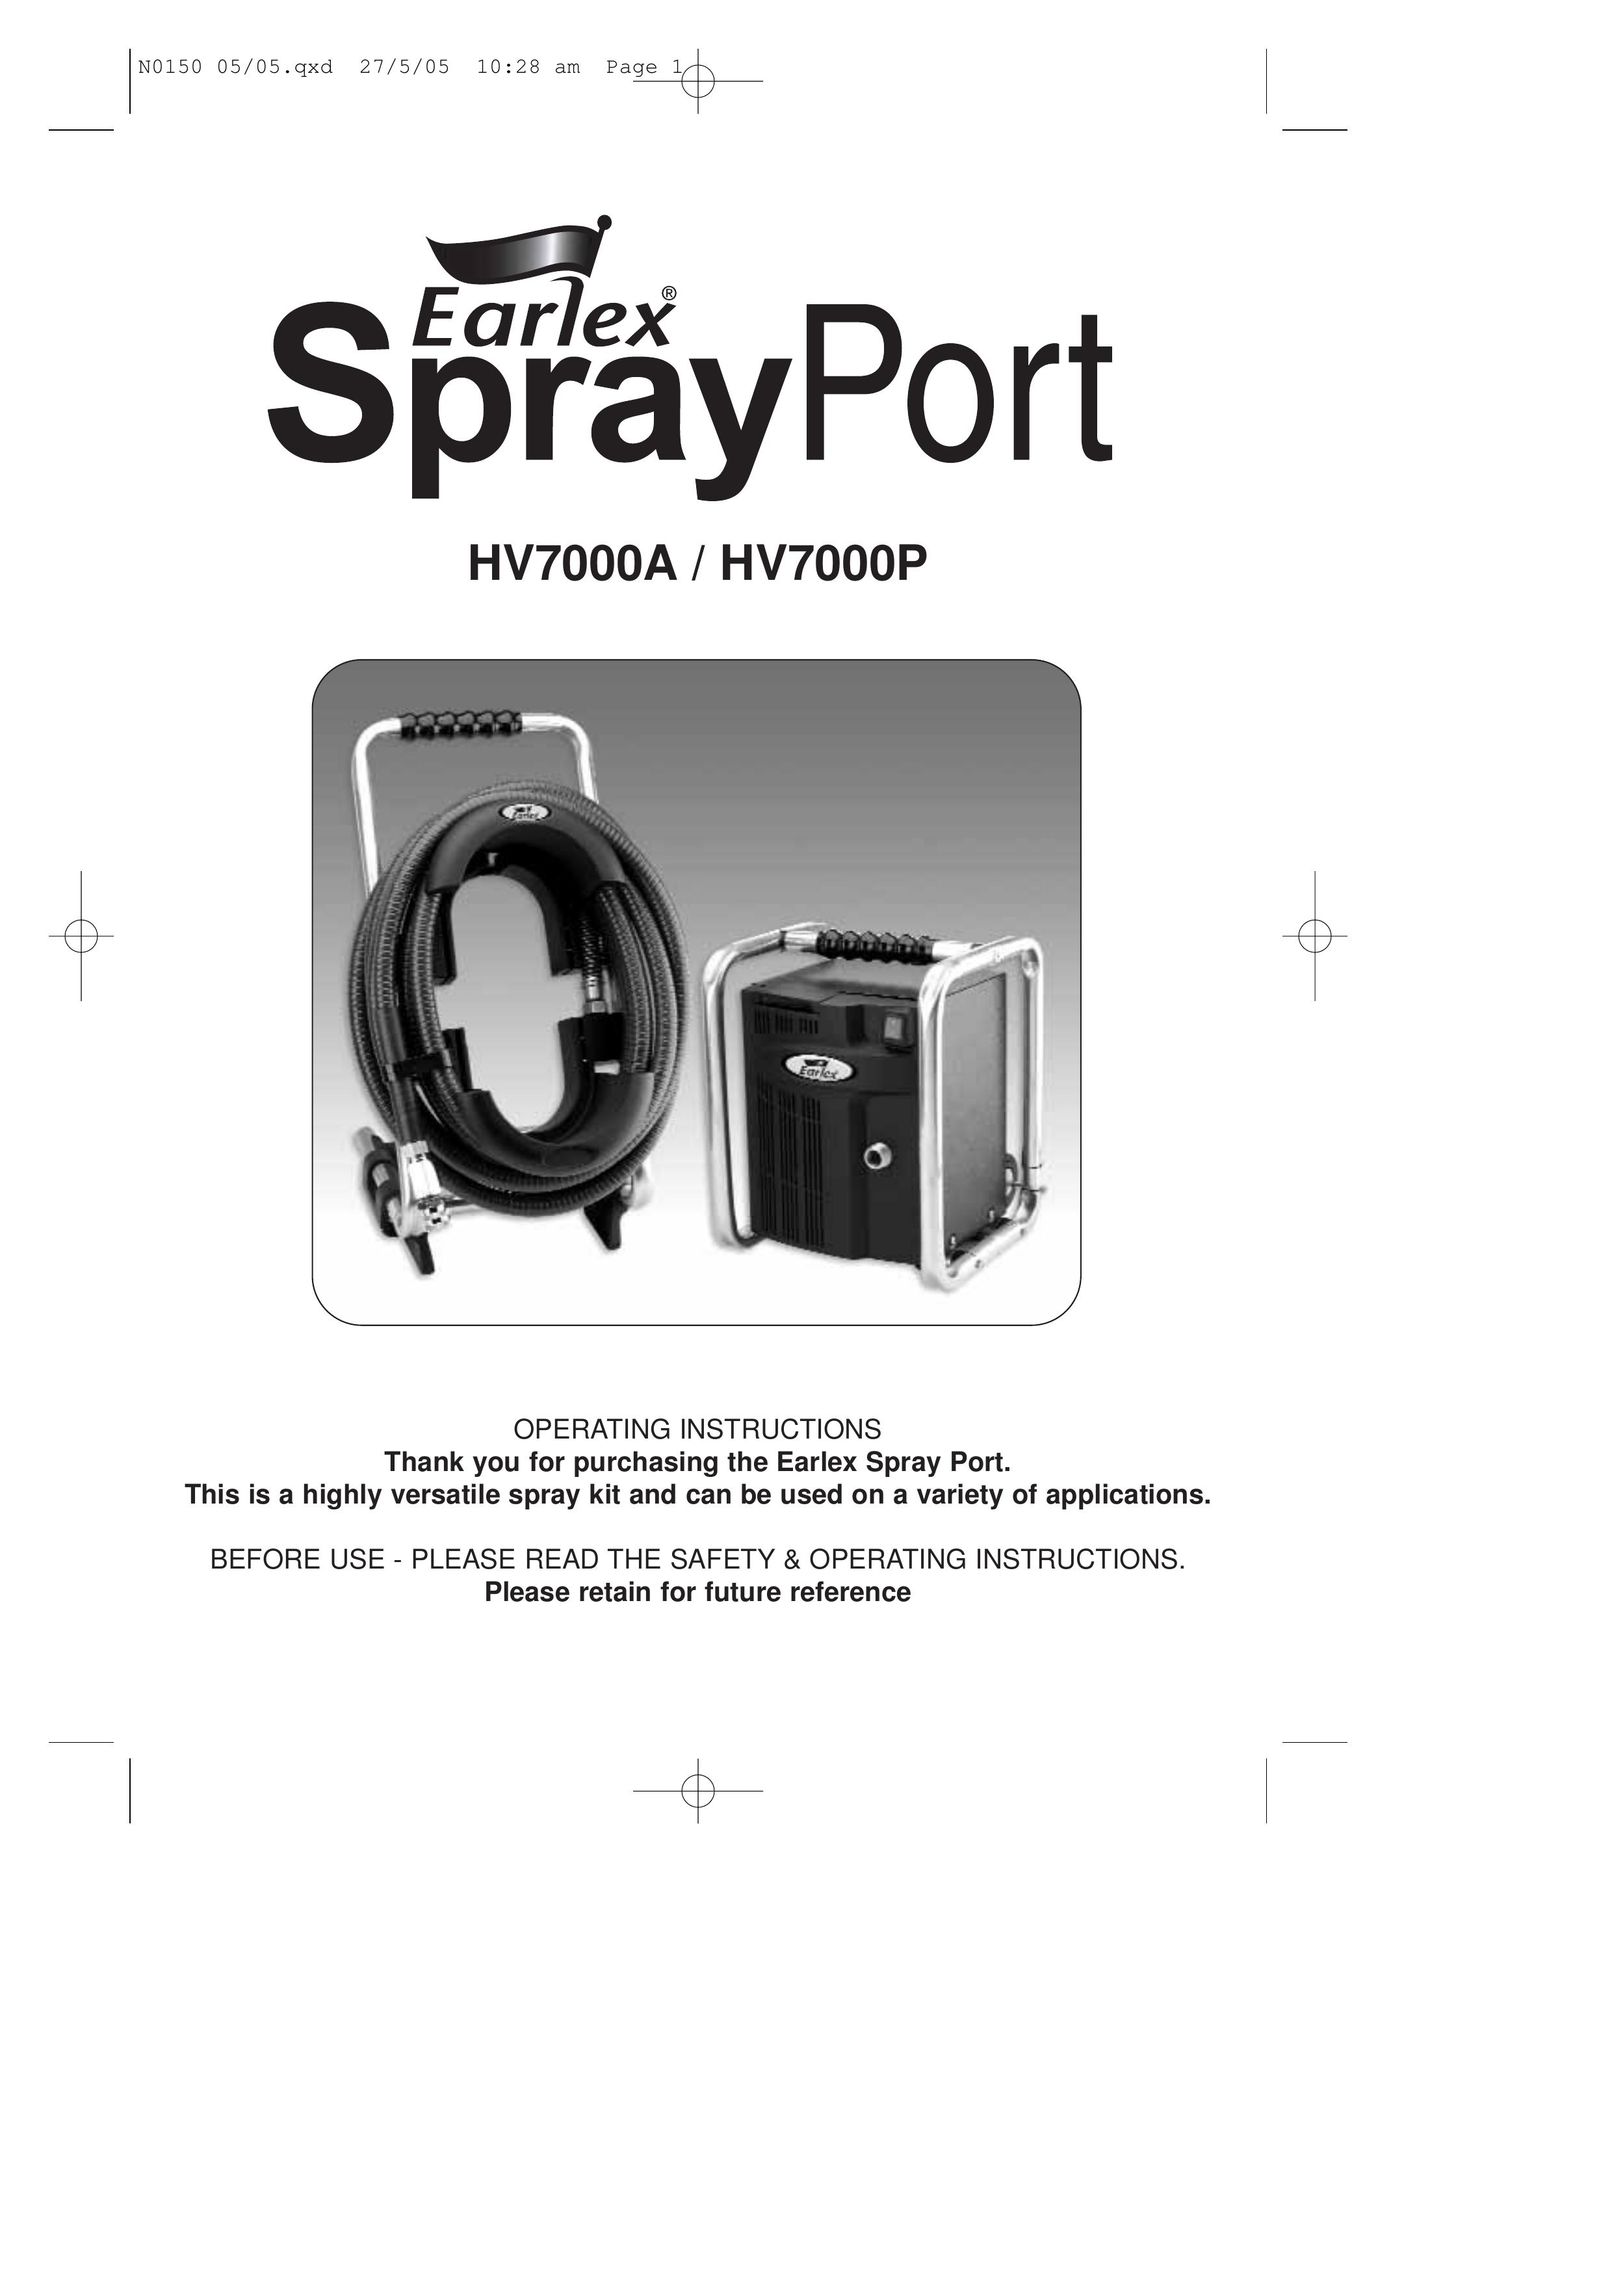 Earlex HV7000A Paint Sprayer User Manual